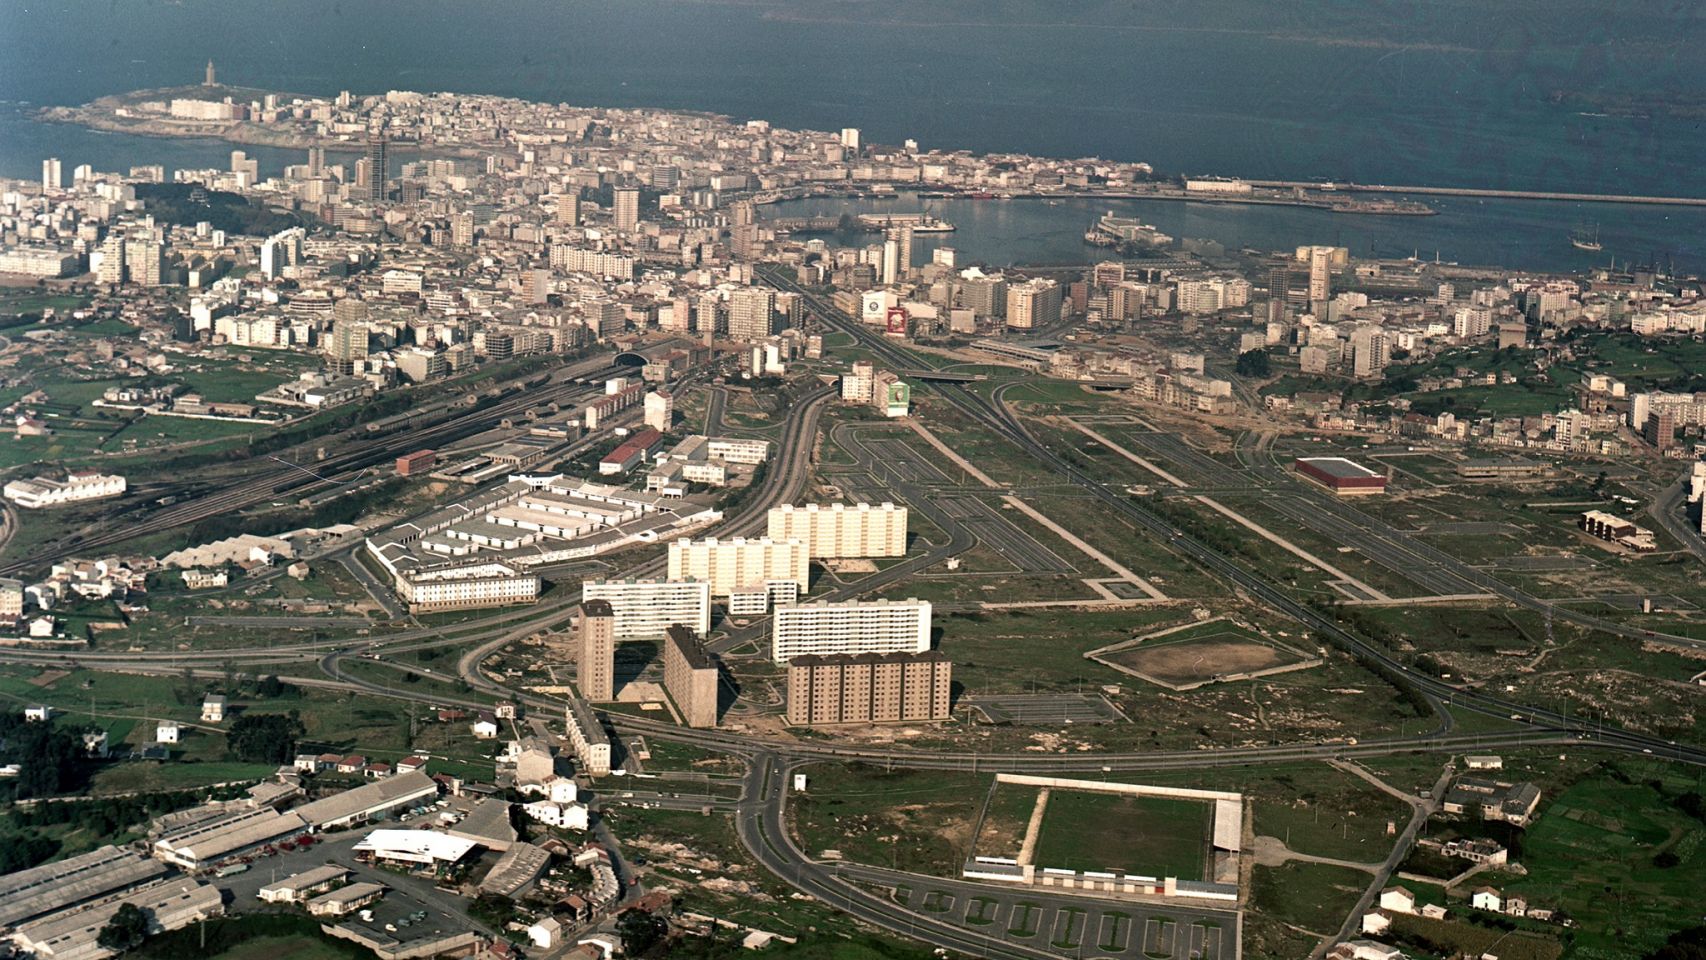 Foto de A Coruña en 1974, con el barrio de Elviña todavía por construir (Arquivo Dixital de Galicia)